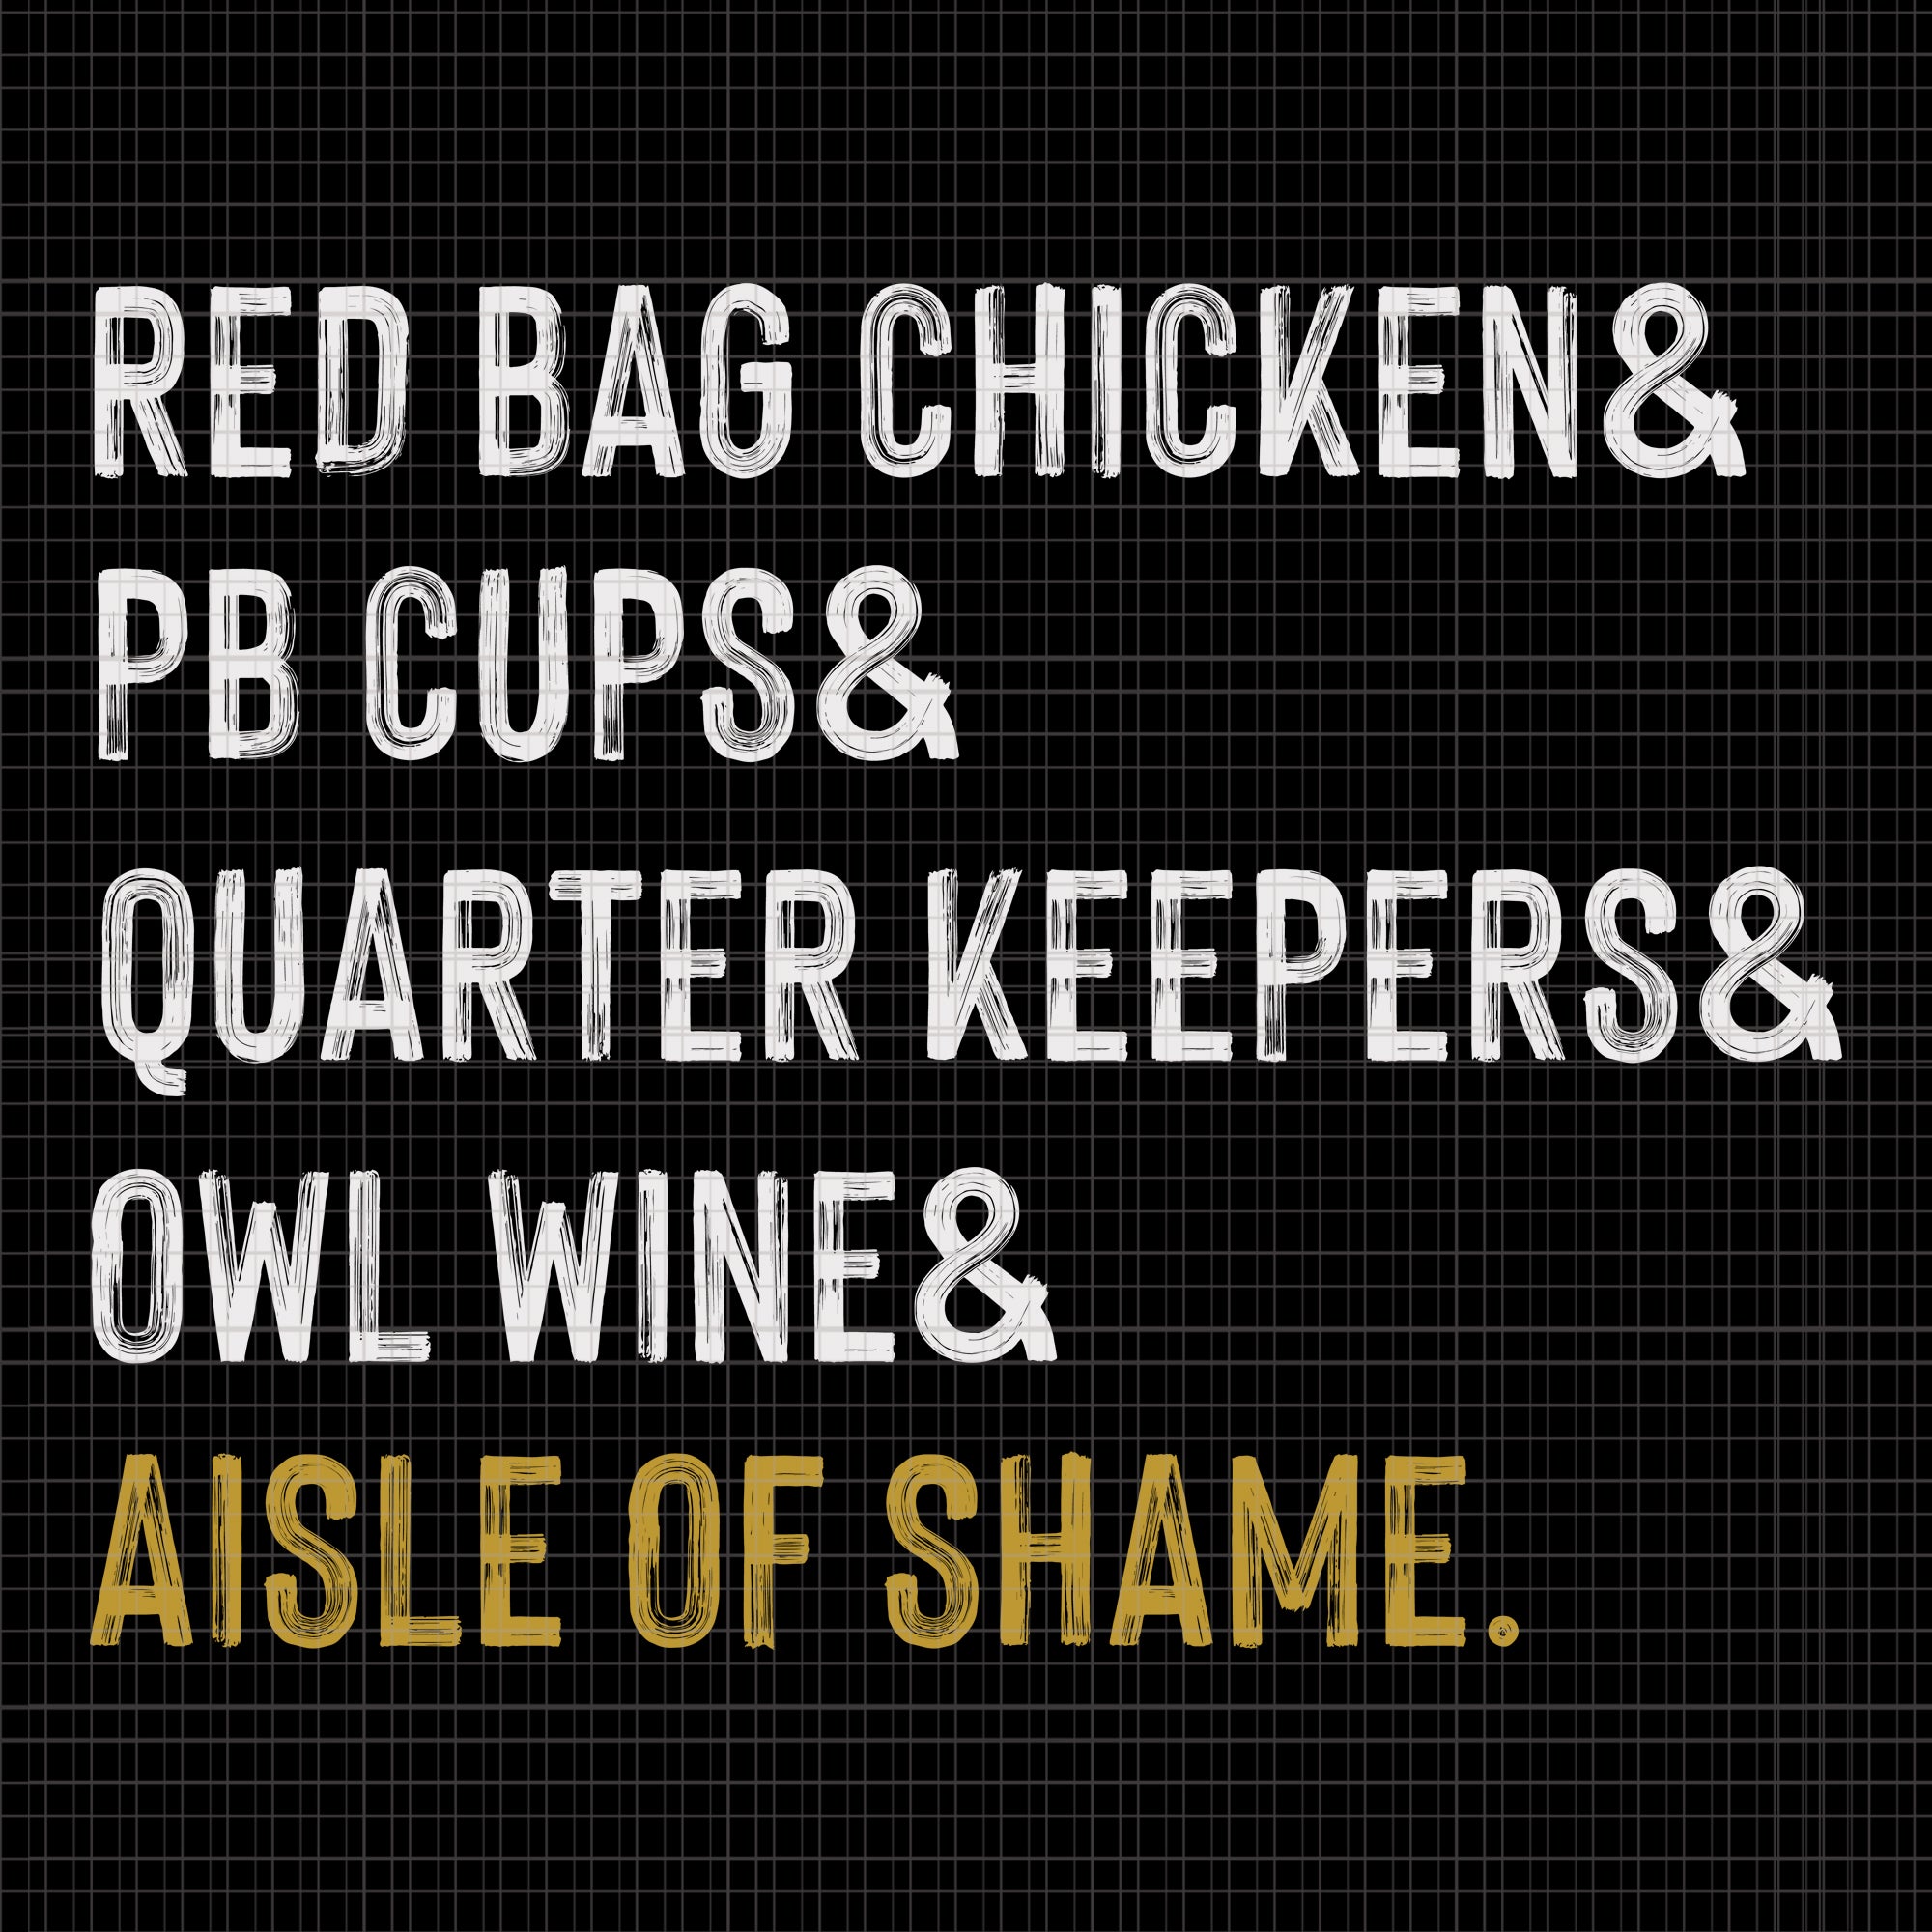 Funny Aisle of Shame Shopping, Funny Aisle of Shame , Aisle of Shame svg, red bag chicken pb cups quarter keepers owl wine Aisle of Shame